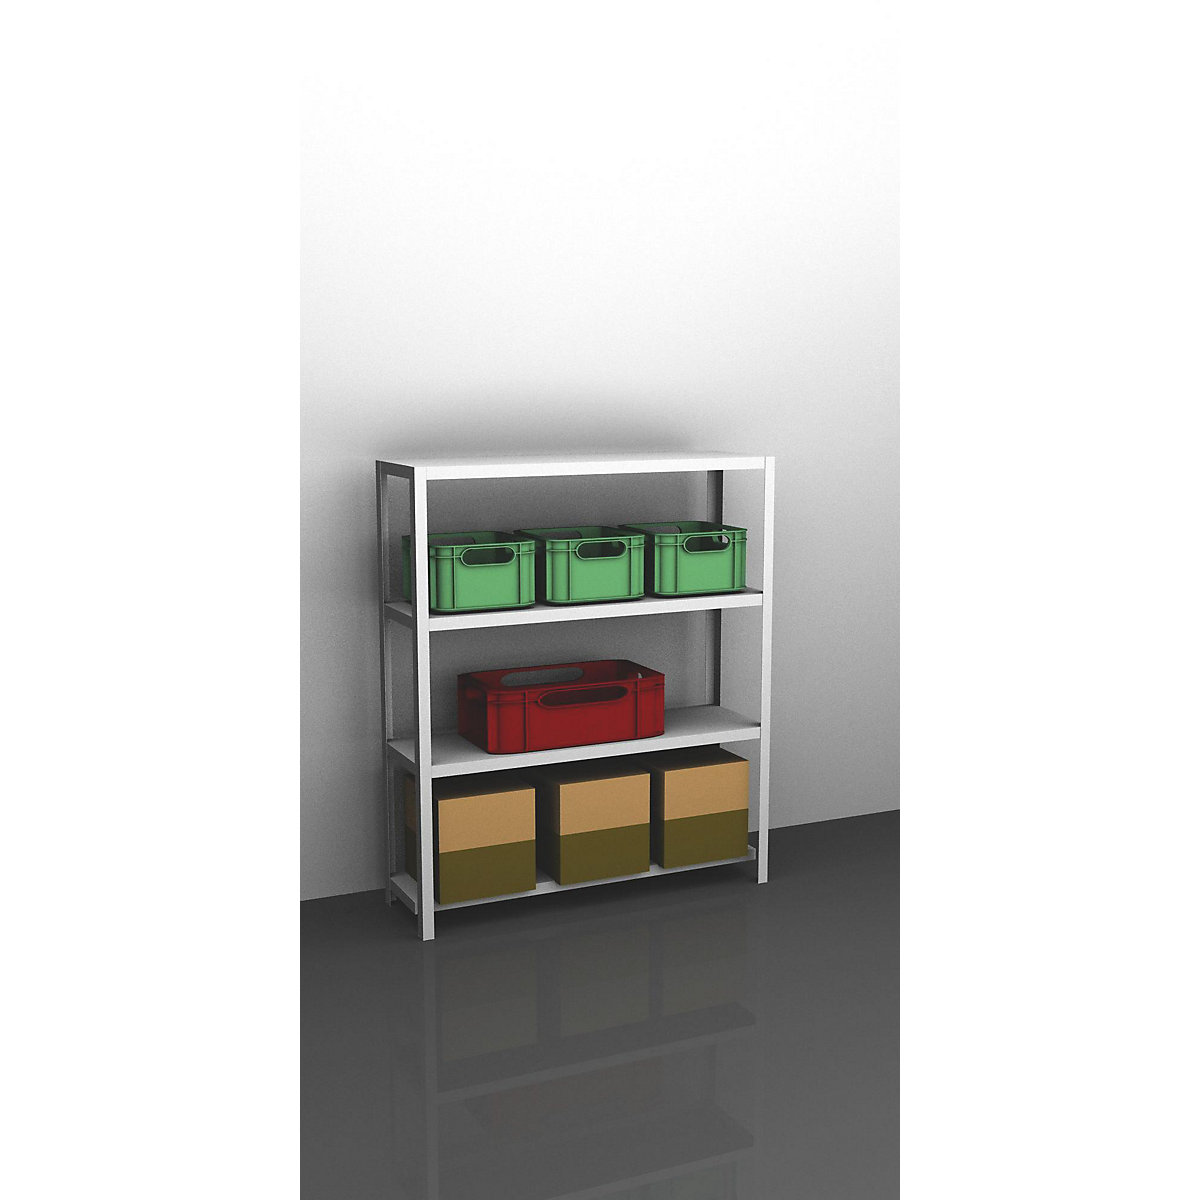 Bolt-together shelf unit, light duty, plastic coated – eurokraft pro, shelf unit height 1500 mm, shelf width 1300 mm, depth 400 mm, standard shelf unit-11